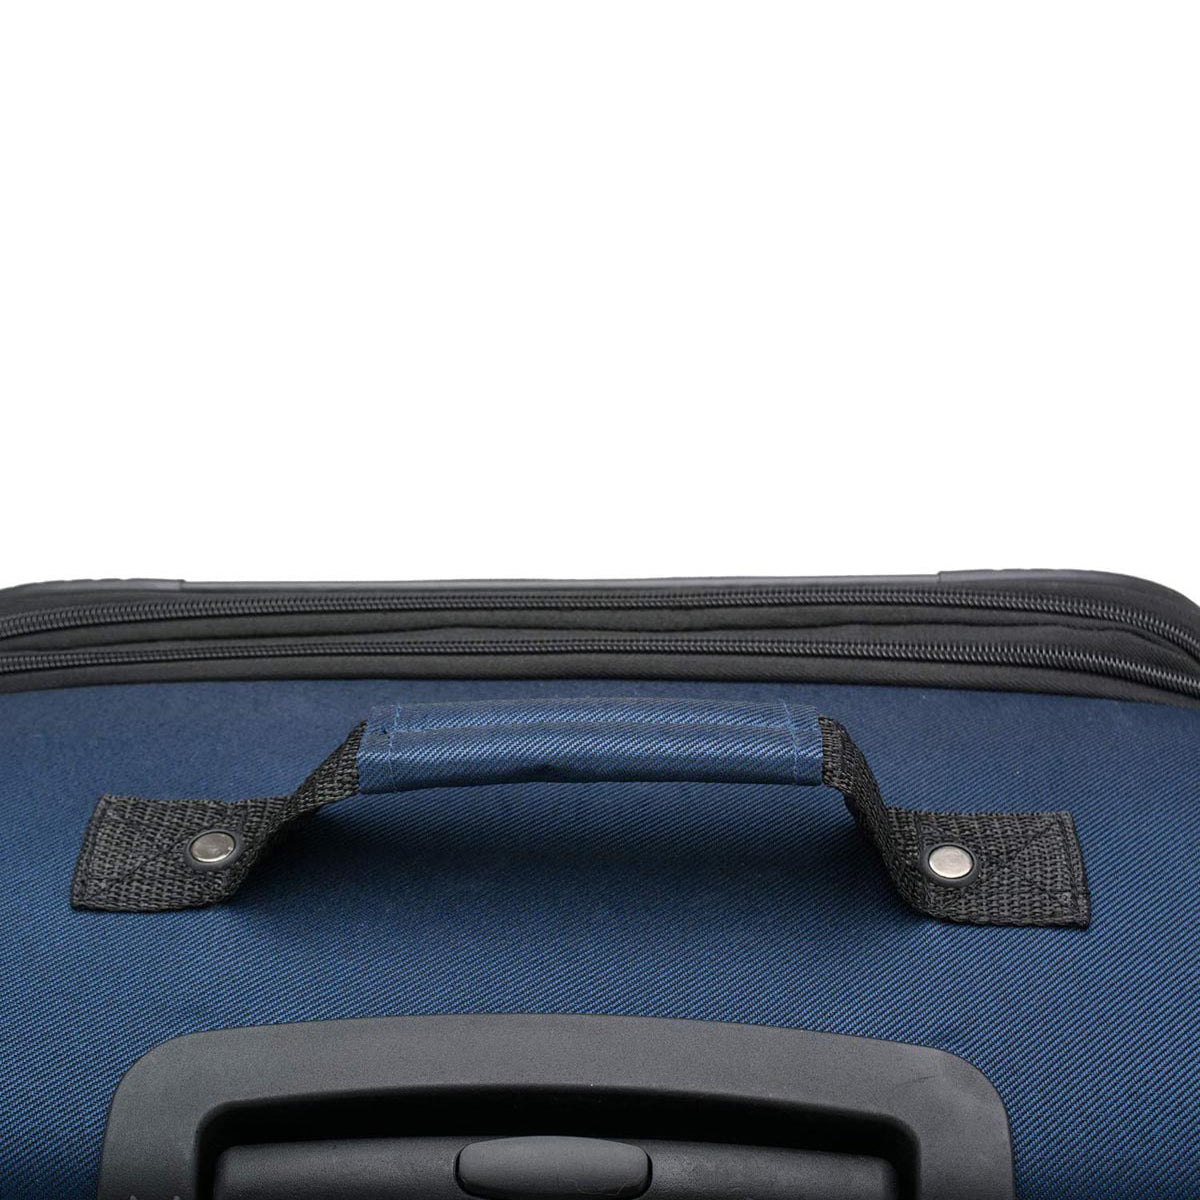 U.S. Traveler Aviron Bay Expandable Softside Luggage with Spinner Wheels, Carry-on